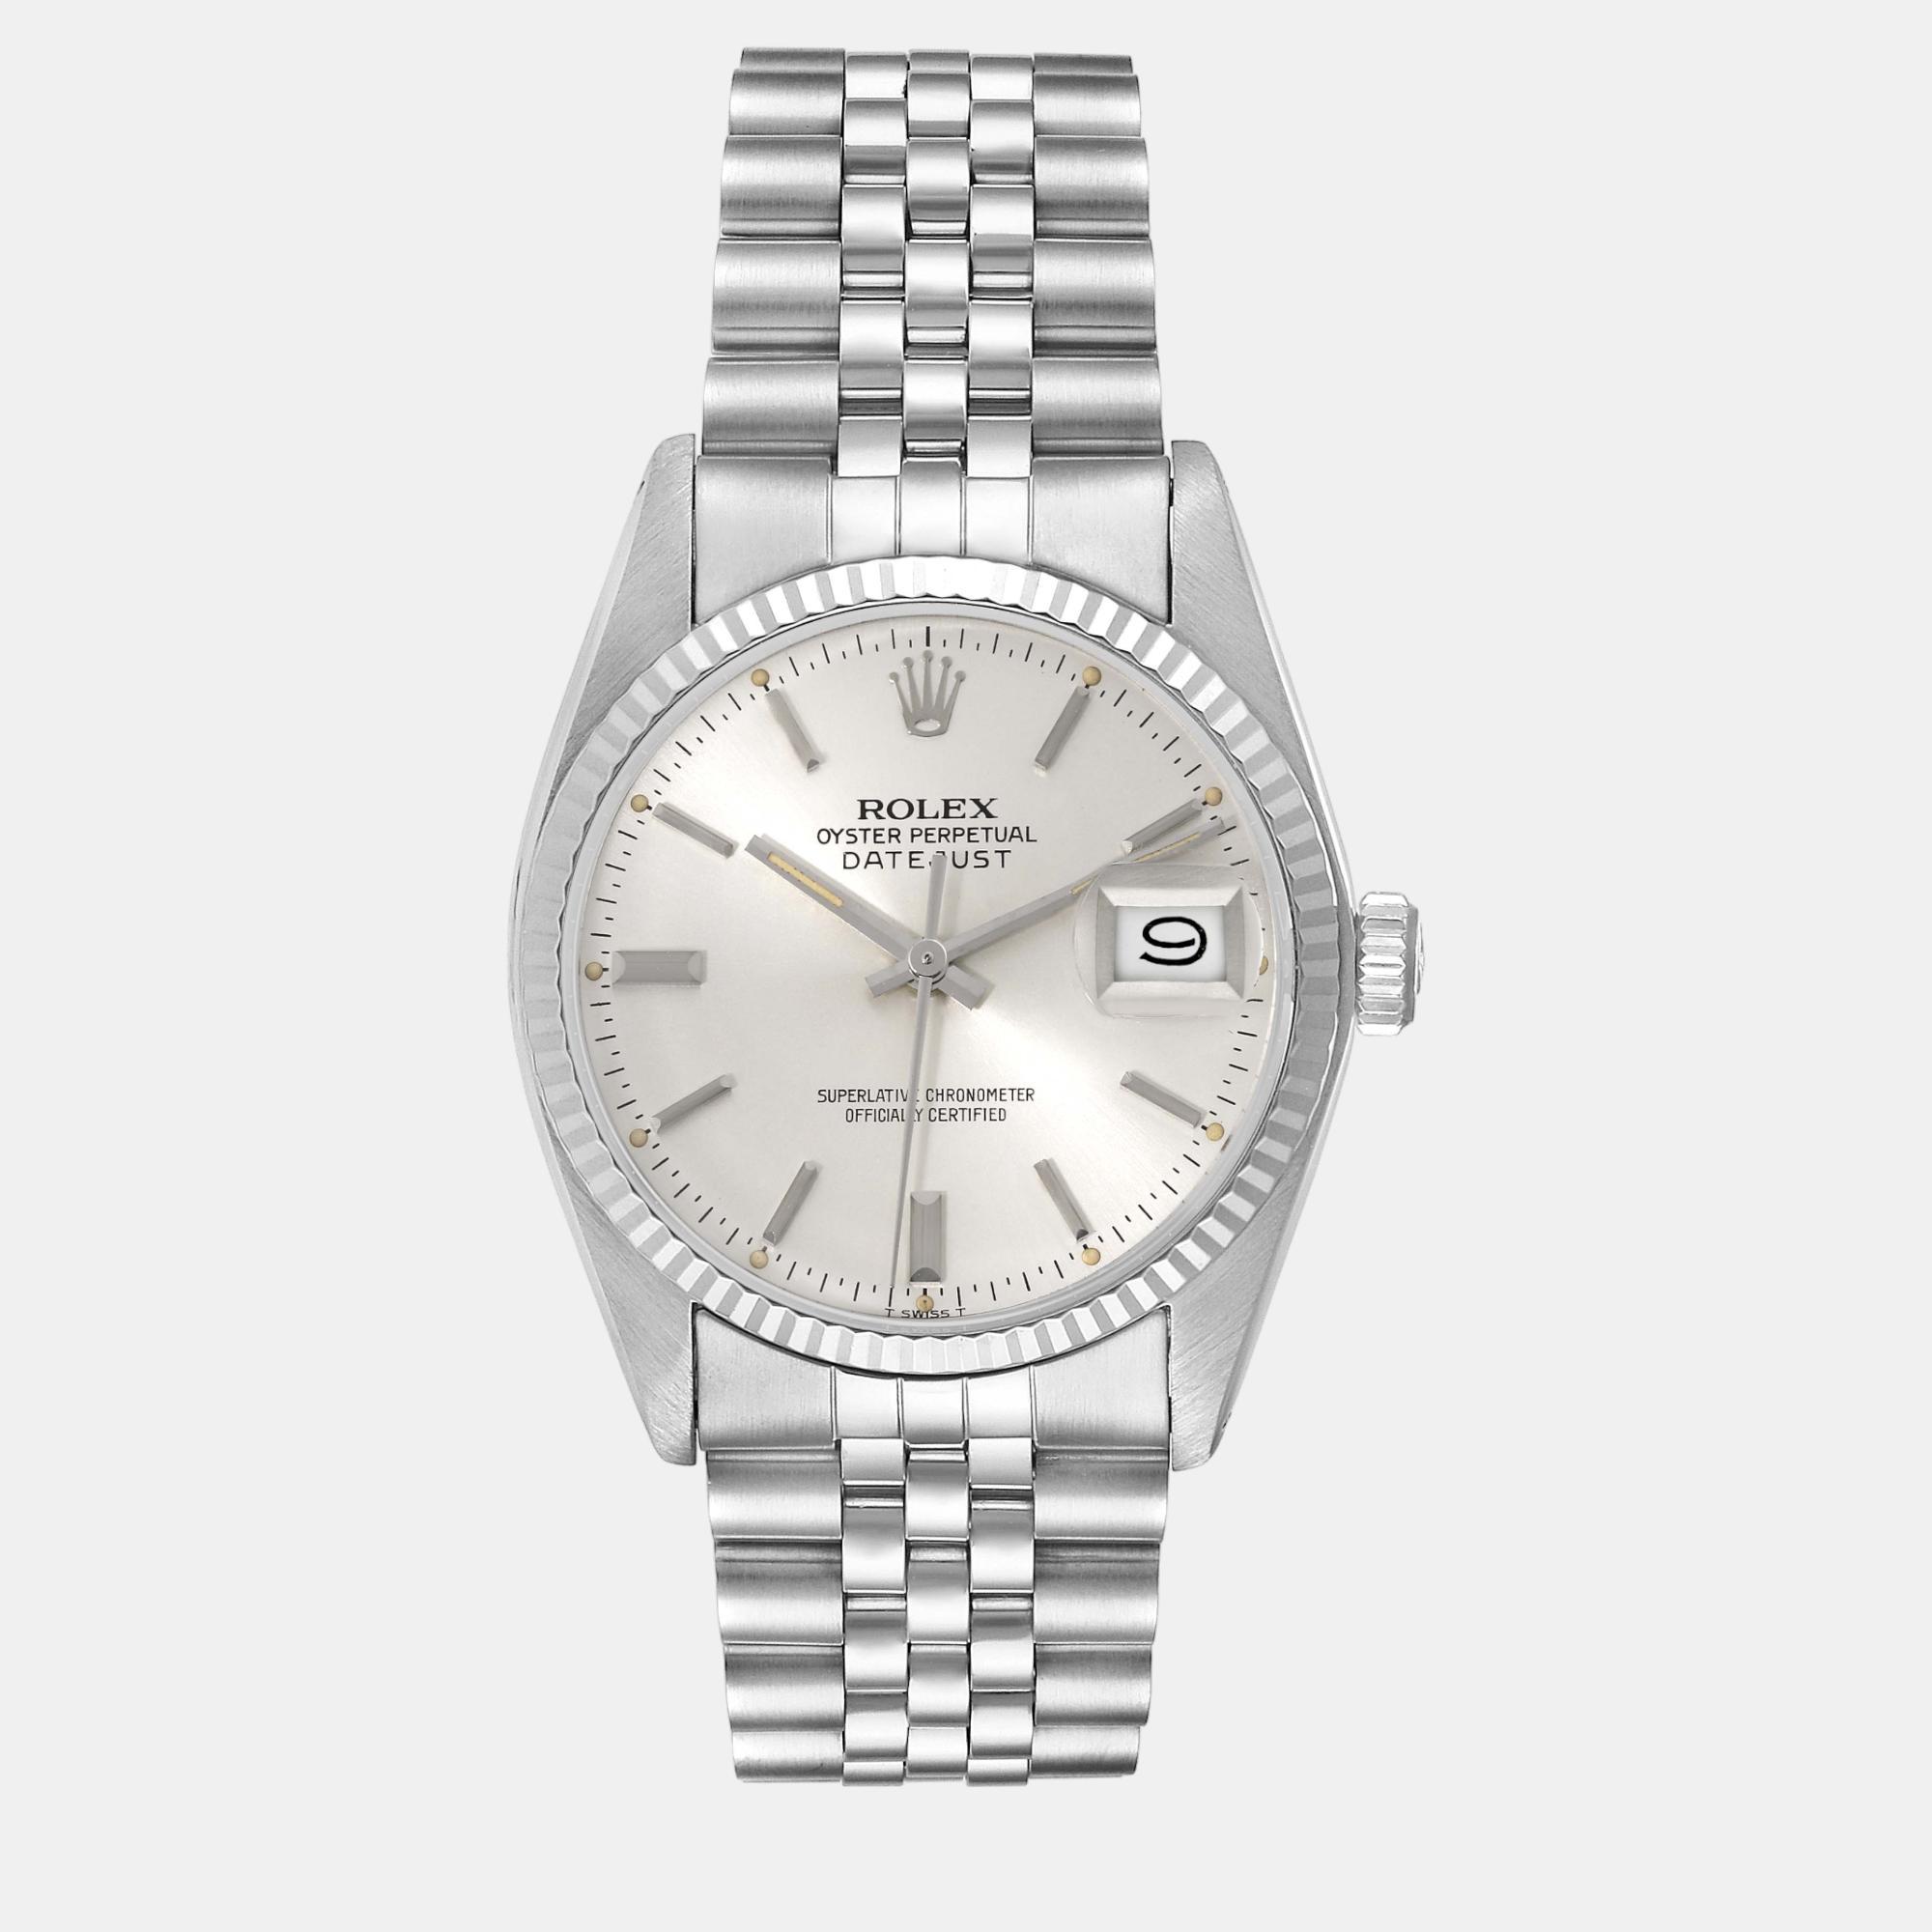 Rolex datejust steel white gold silver dial vintage men's watch 36 mm